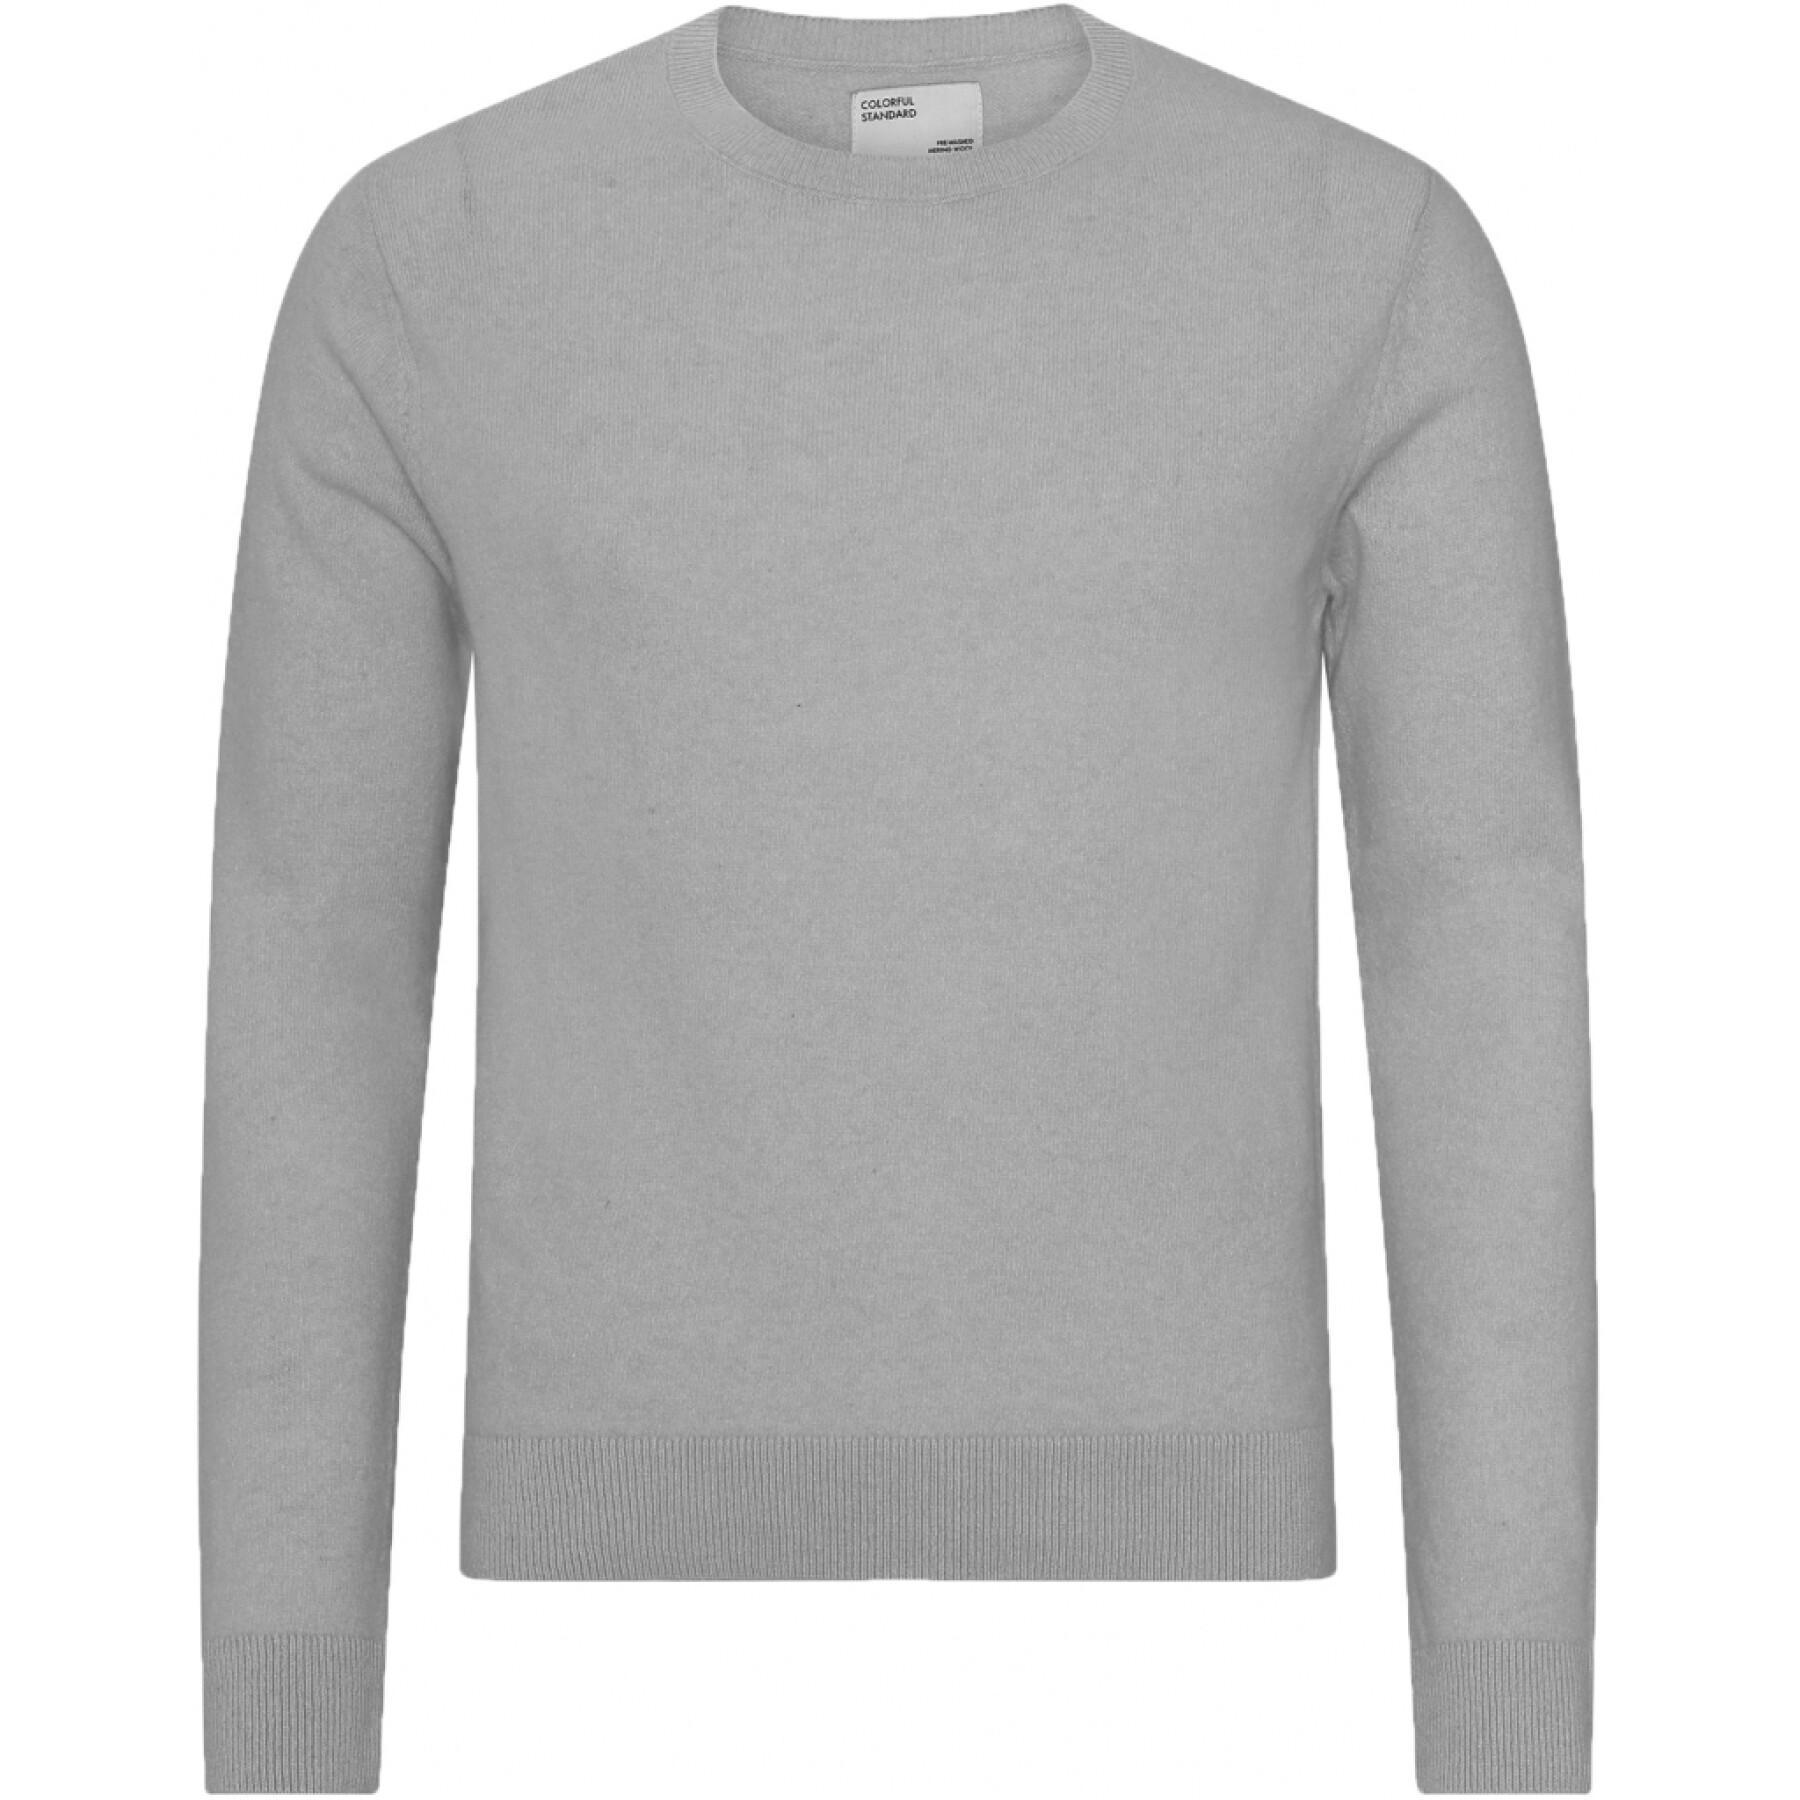 Wełniany sweter z okrągłym dekoltem Colorful Standard Light Merino heather grey 2020 color